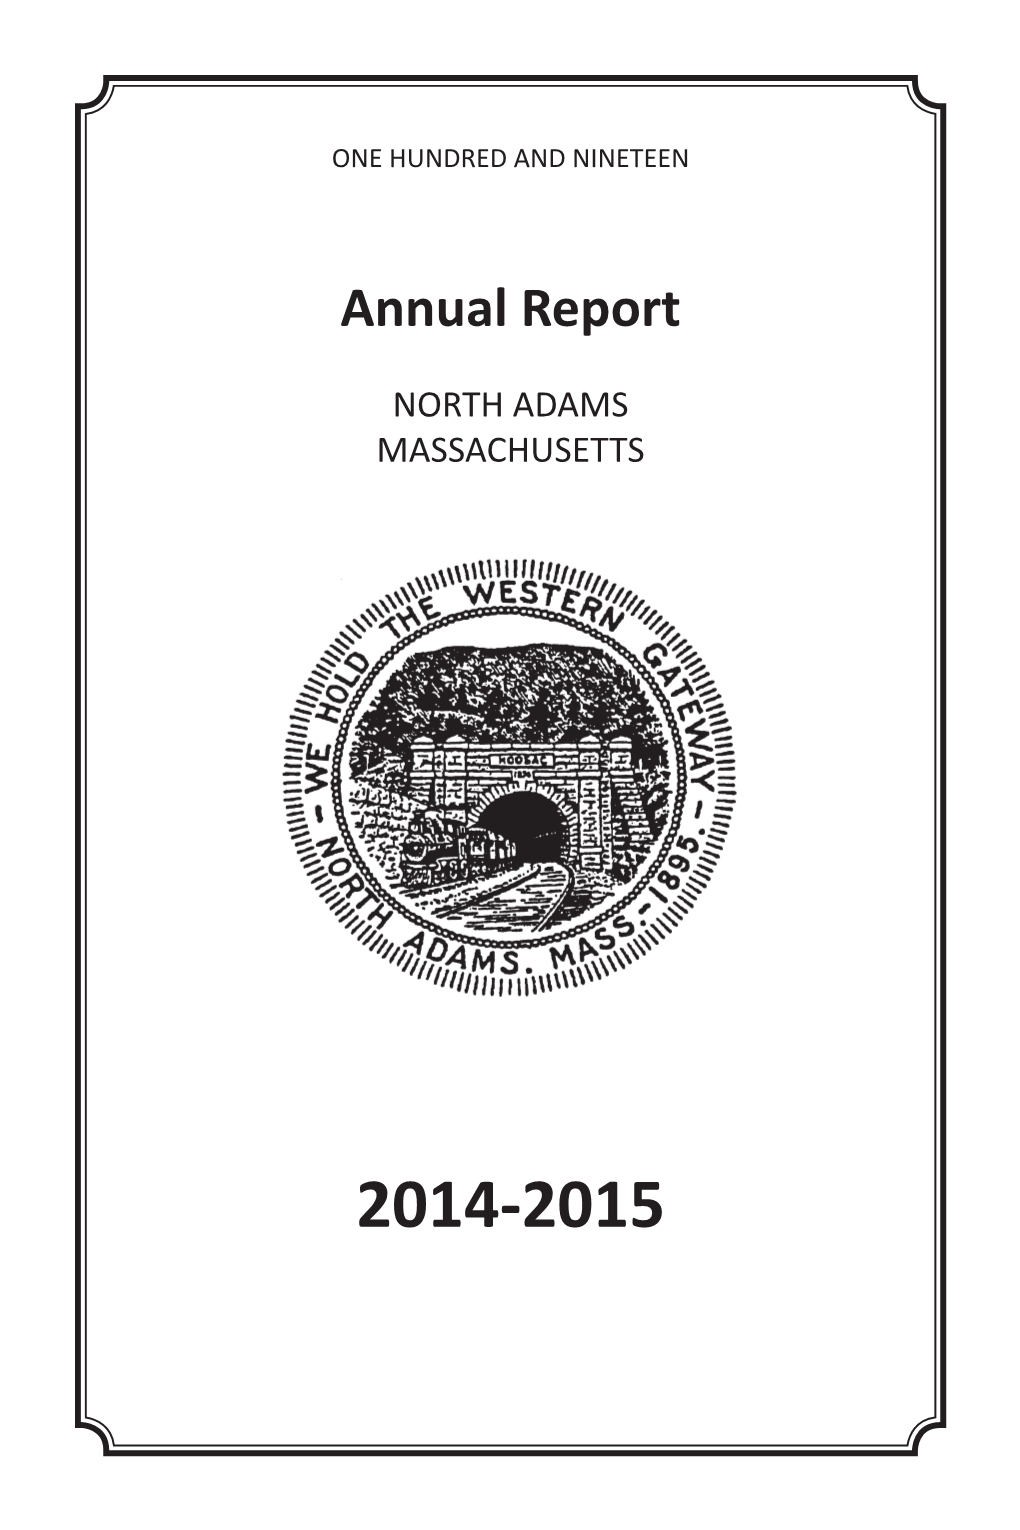 City of North Adams Annual Report 2014-2015